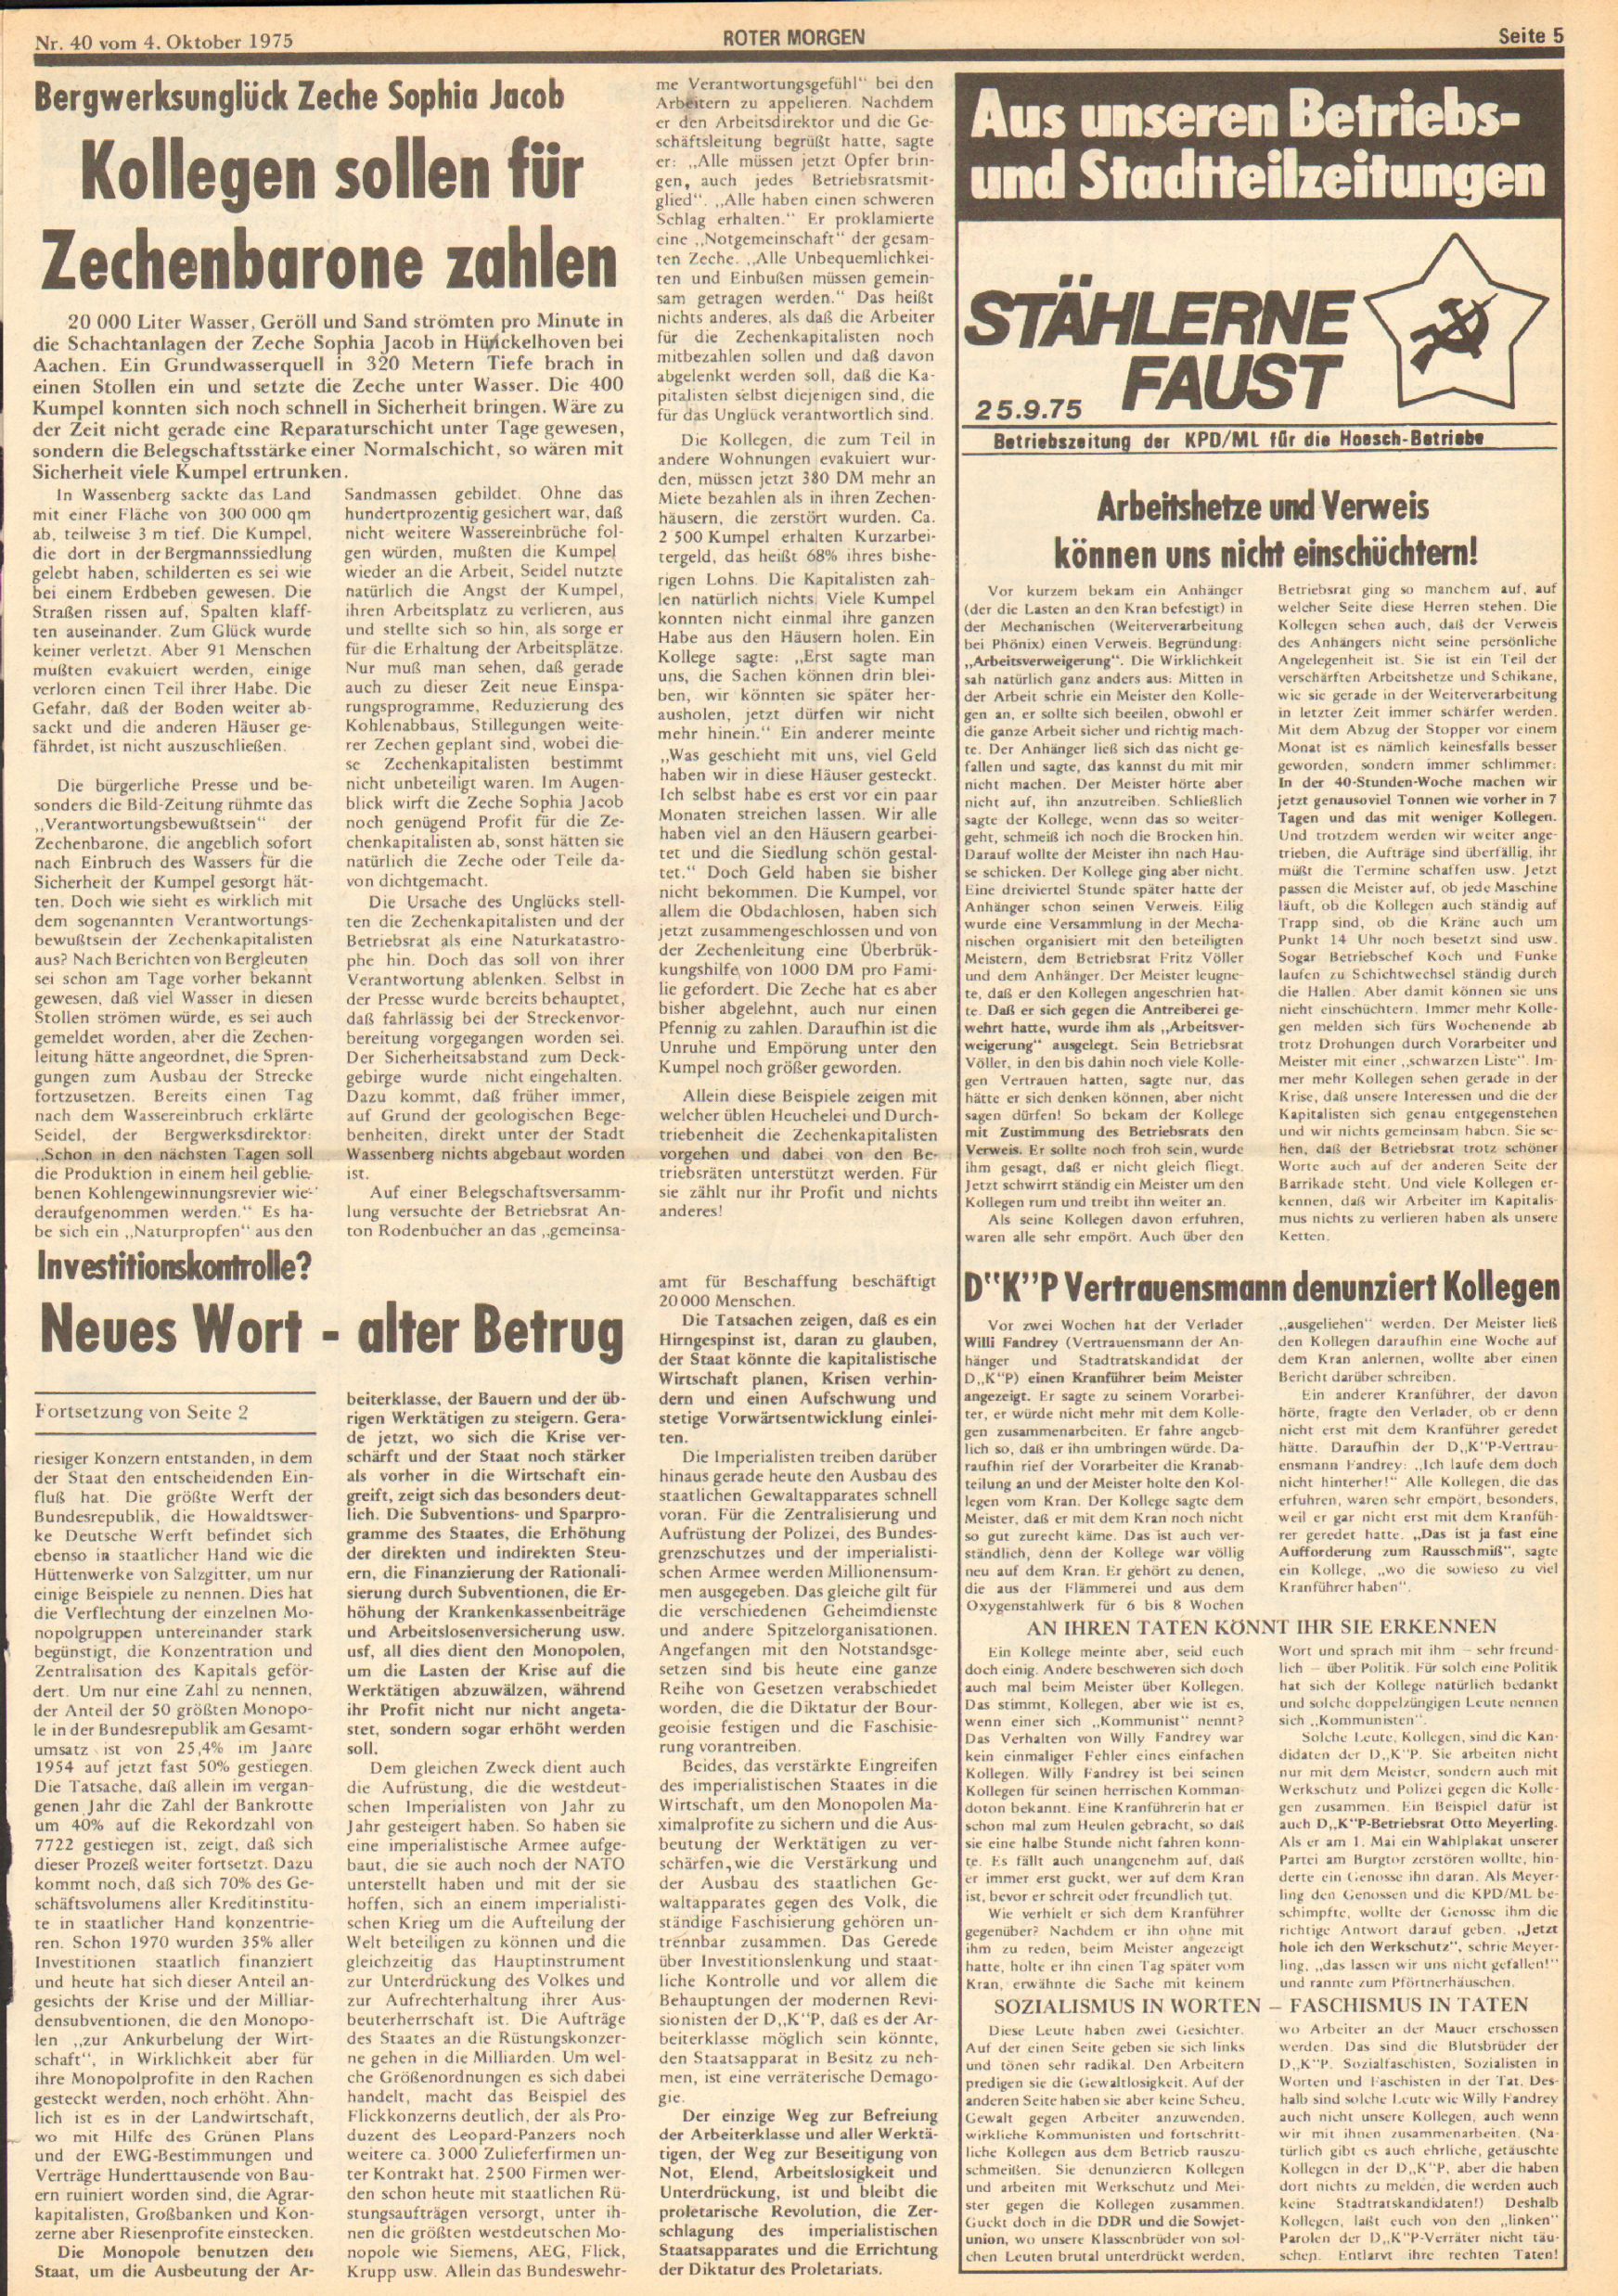 Roter Morgen, 9. Jg., 4. Oktober 1975, Nr. 40, Seite 5